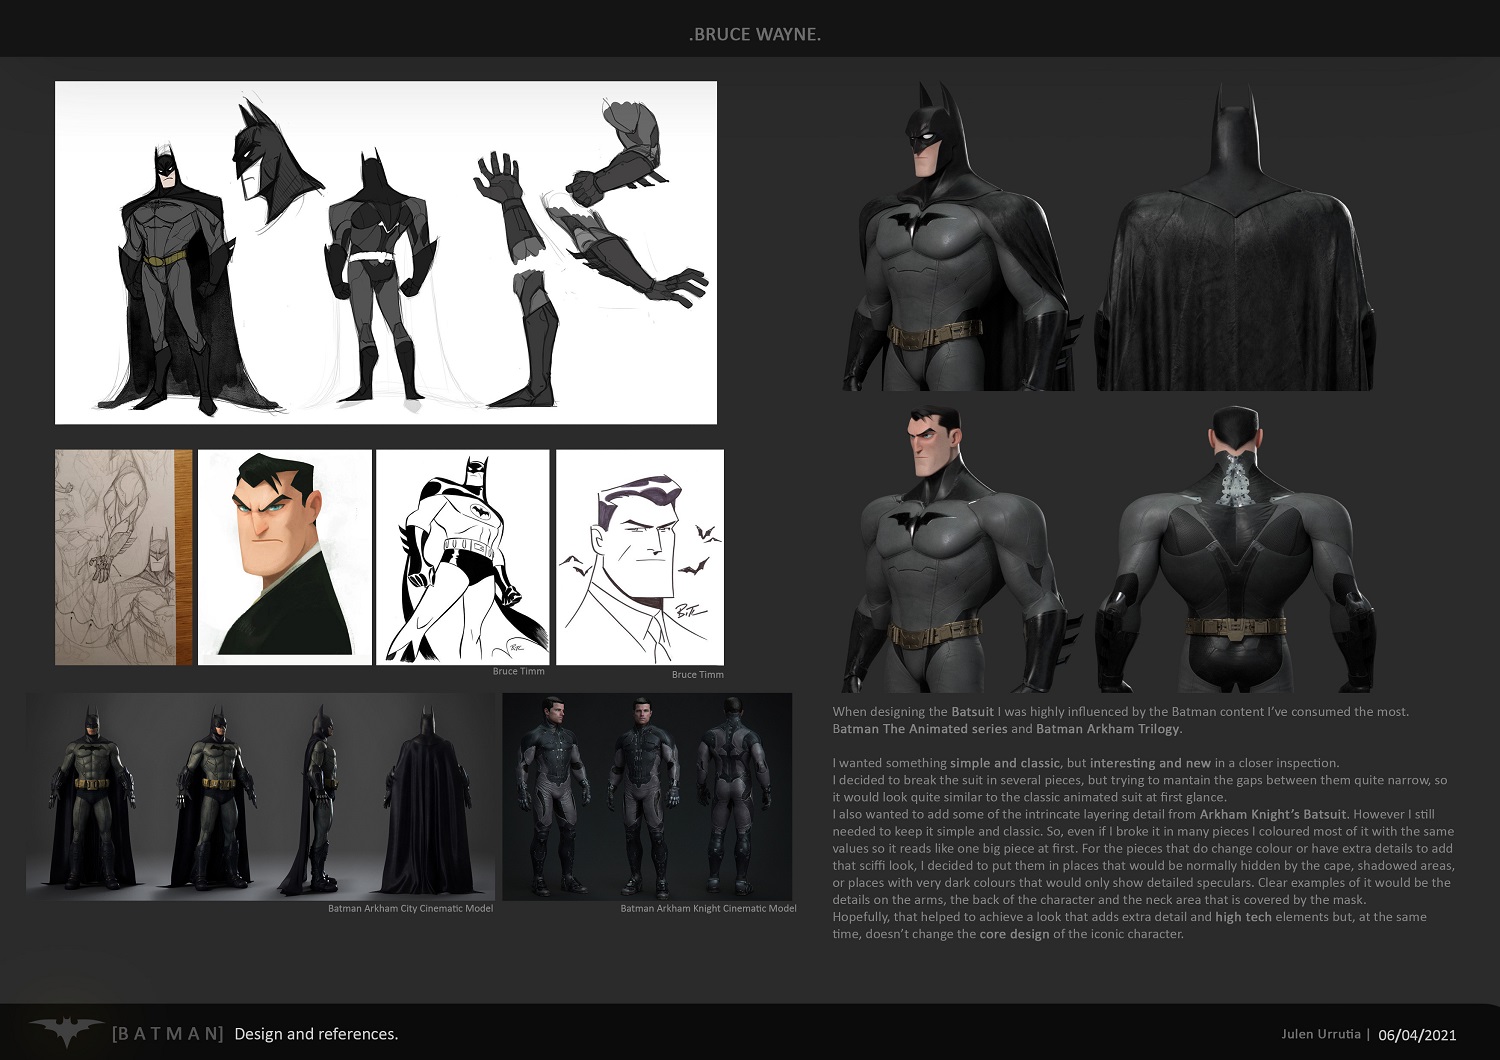 Julen Urrutia artista digital reimagina Batman atraves de computacao grafica 15